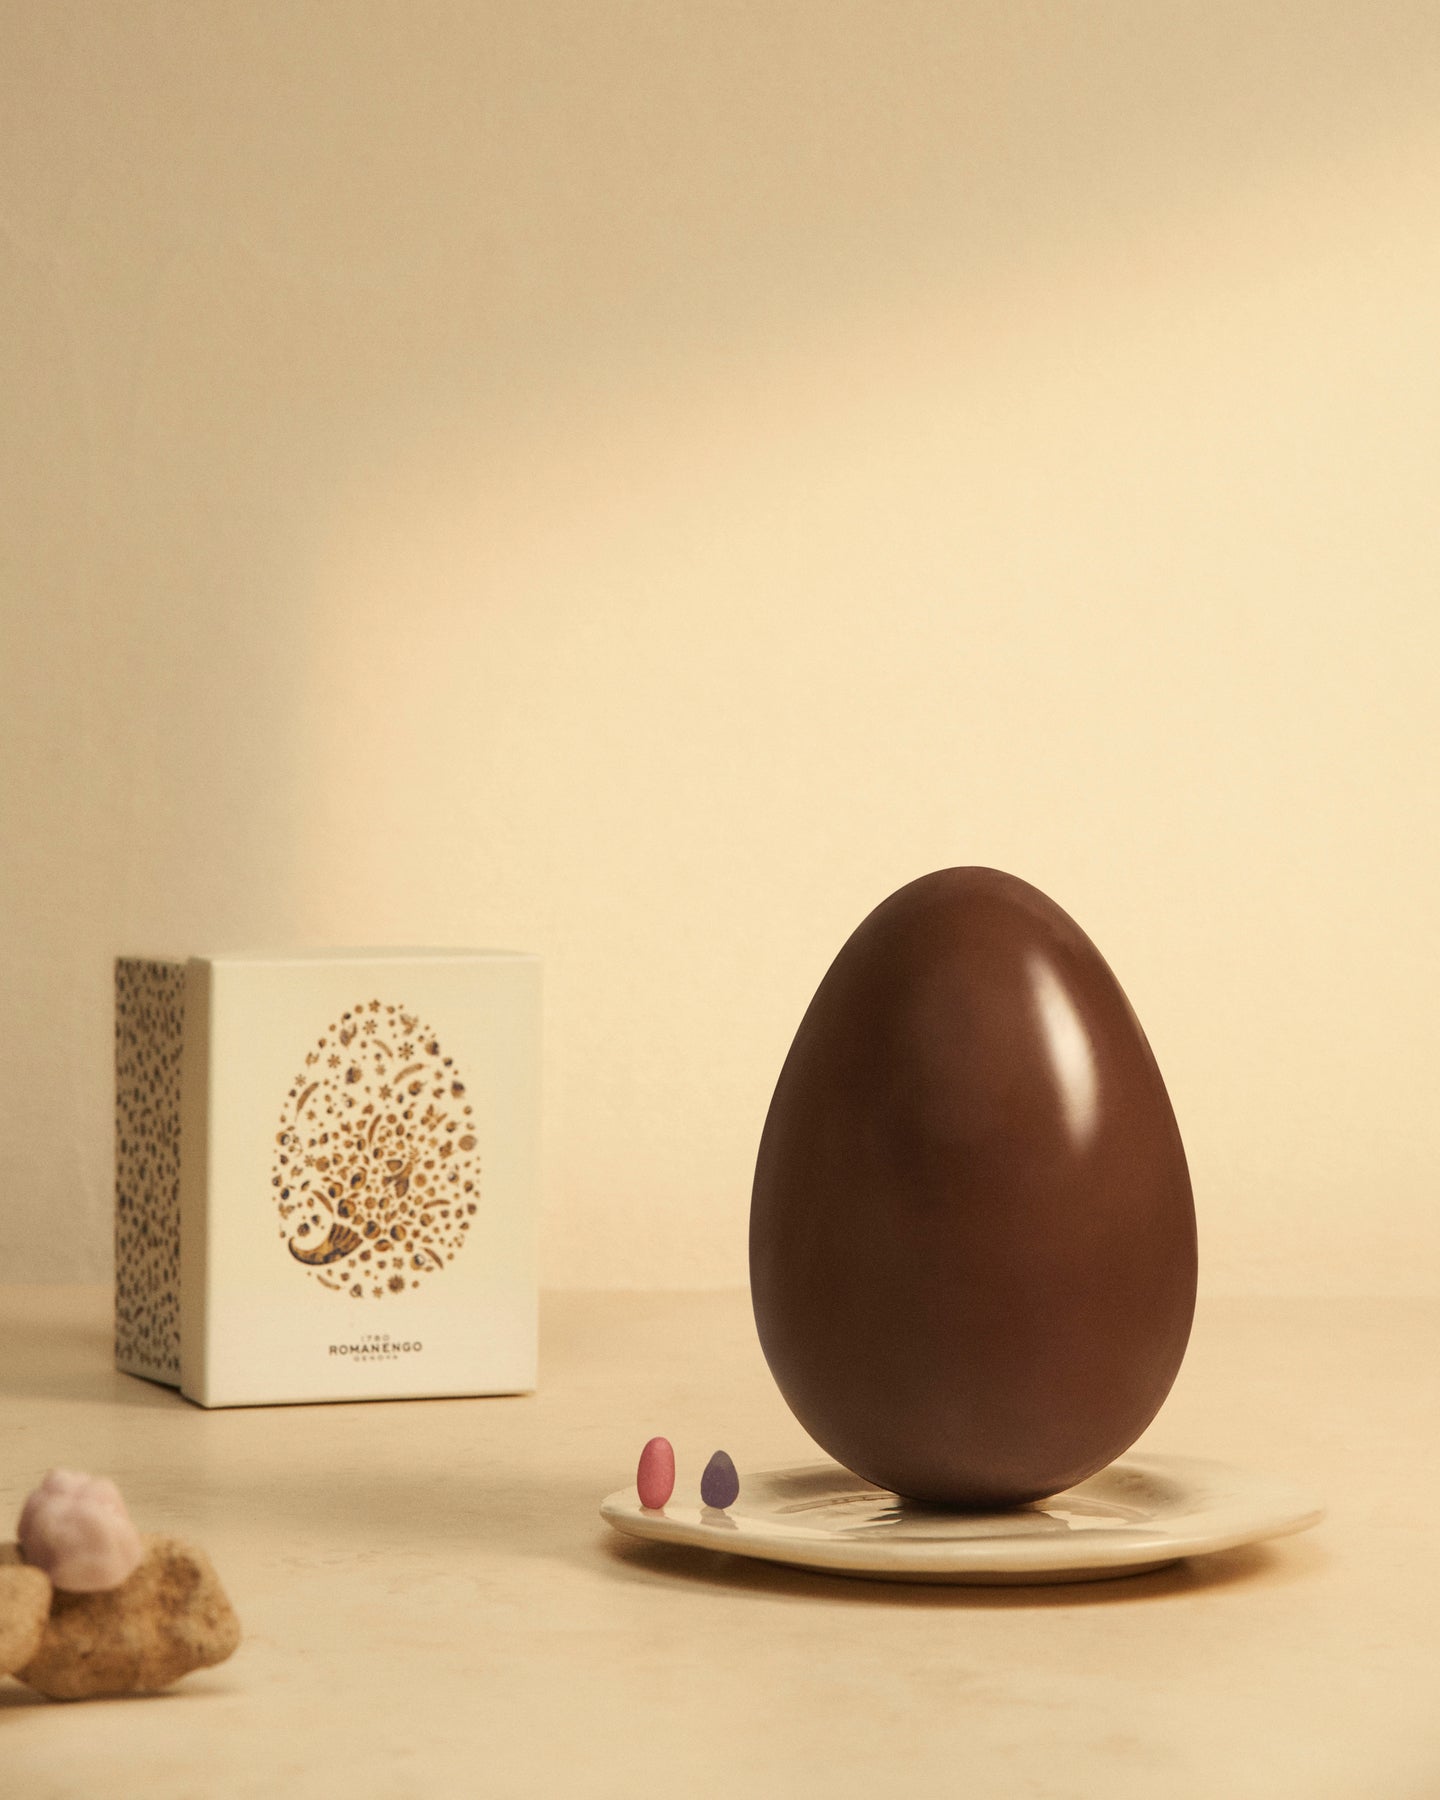 Dark Chocolate Eggs 64% with New Fancy Box